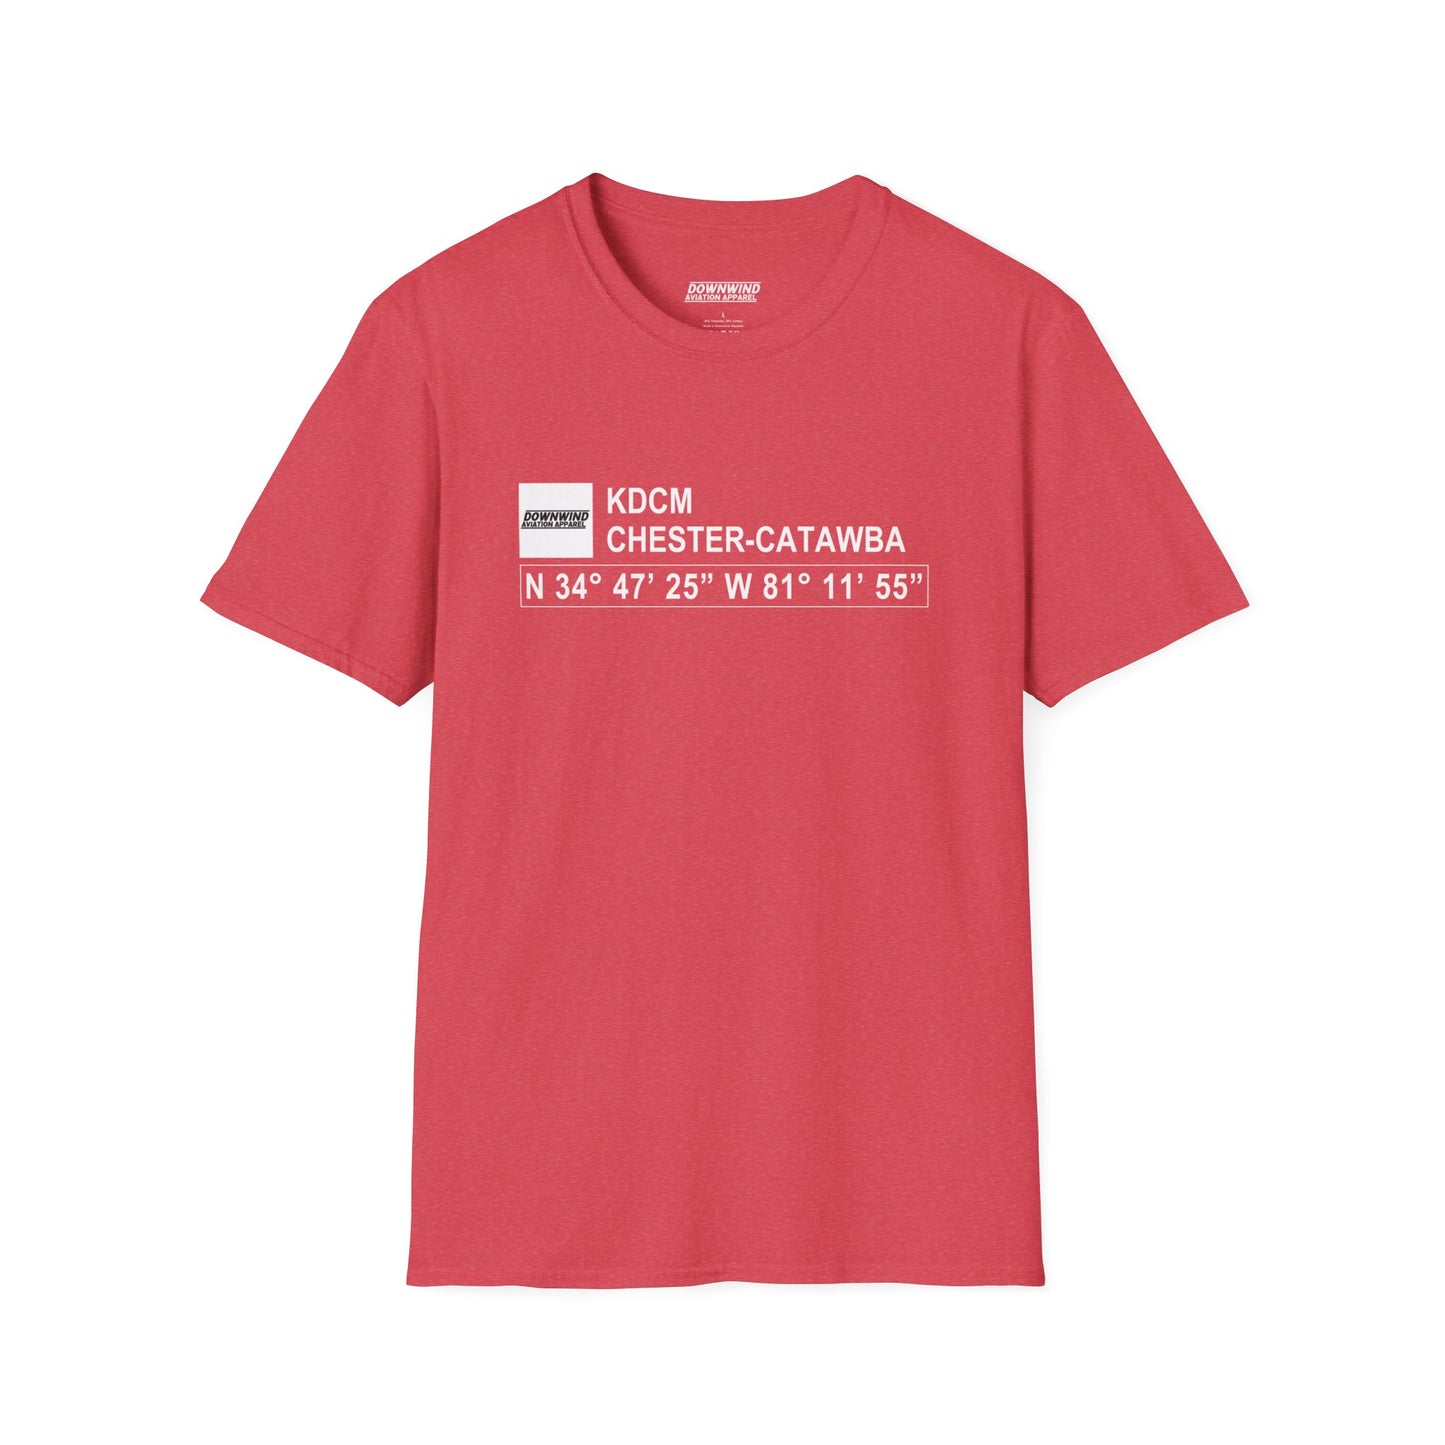 KDCM / Chester-Catawba T-Shirt